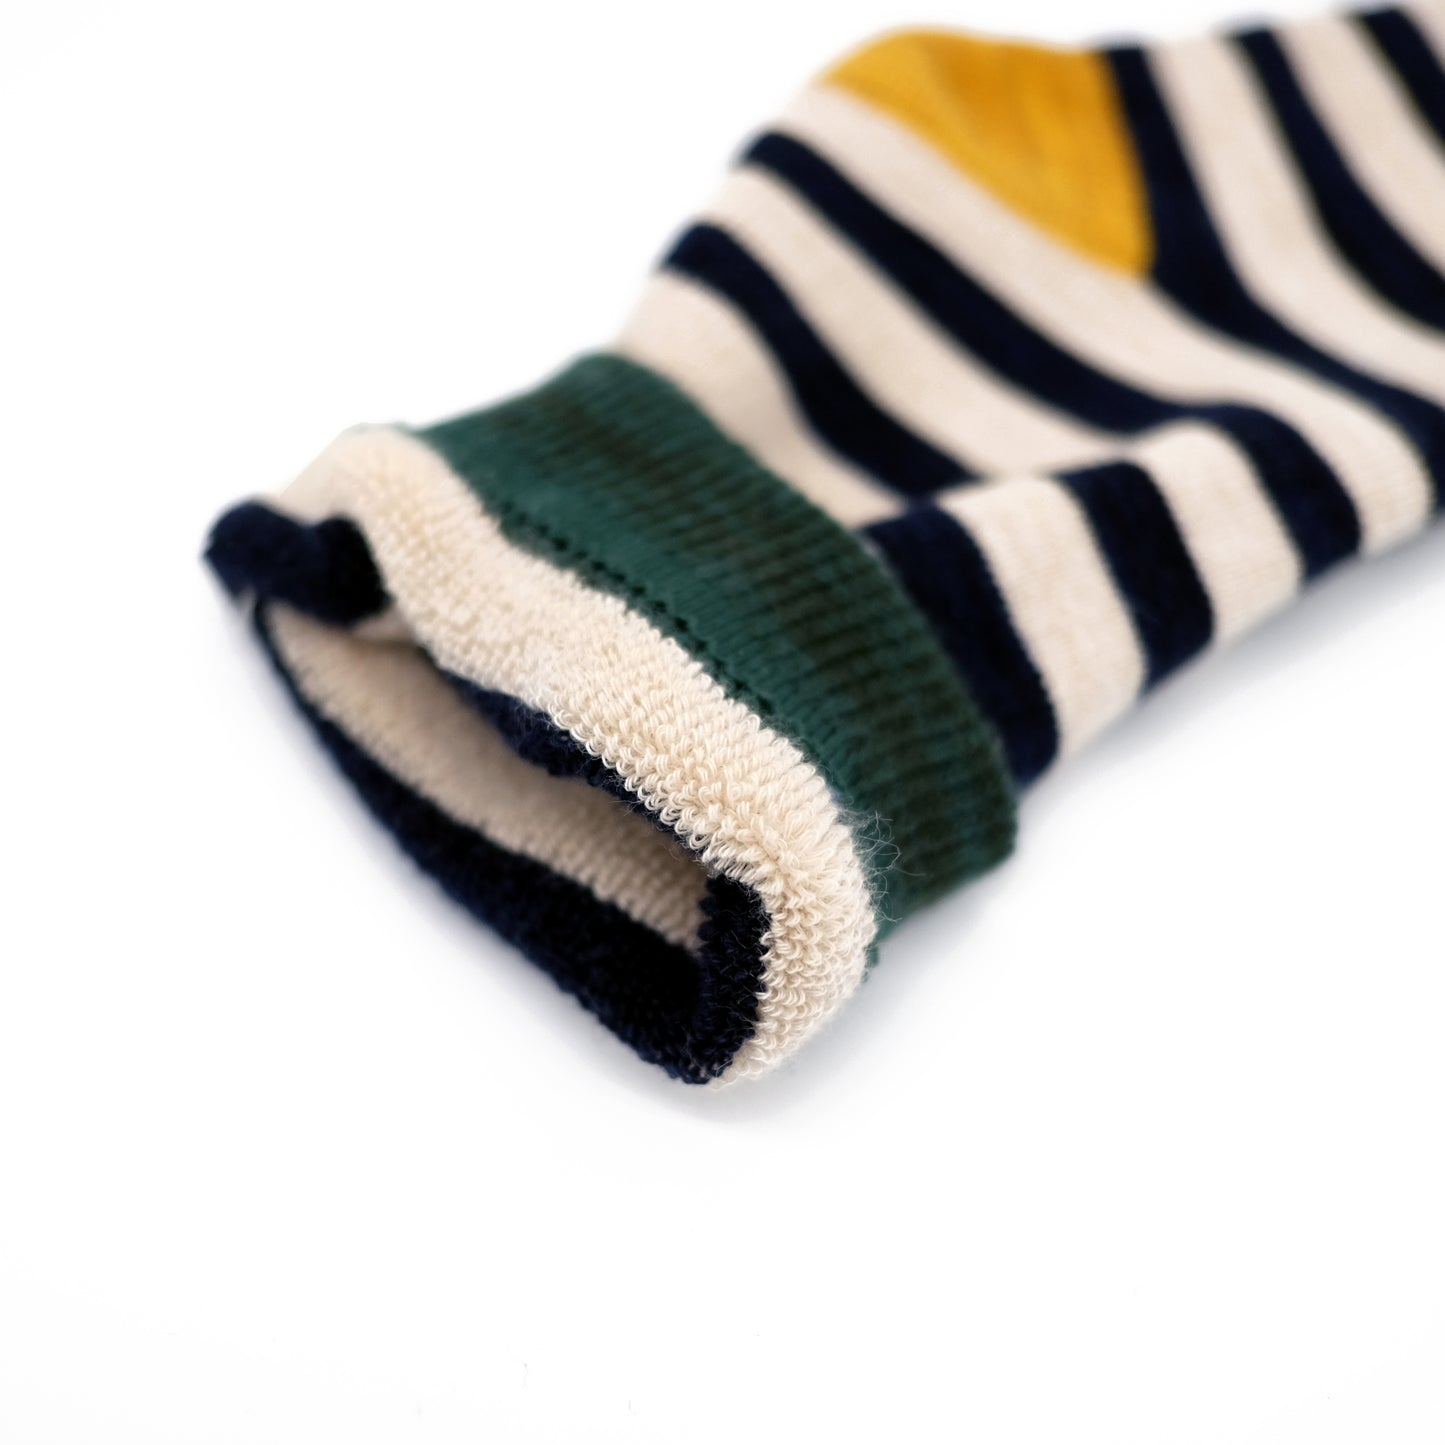 Thick Stripe Sock - Green